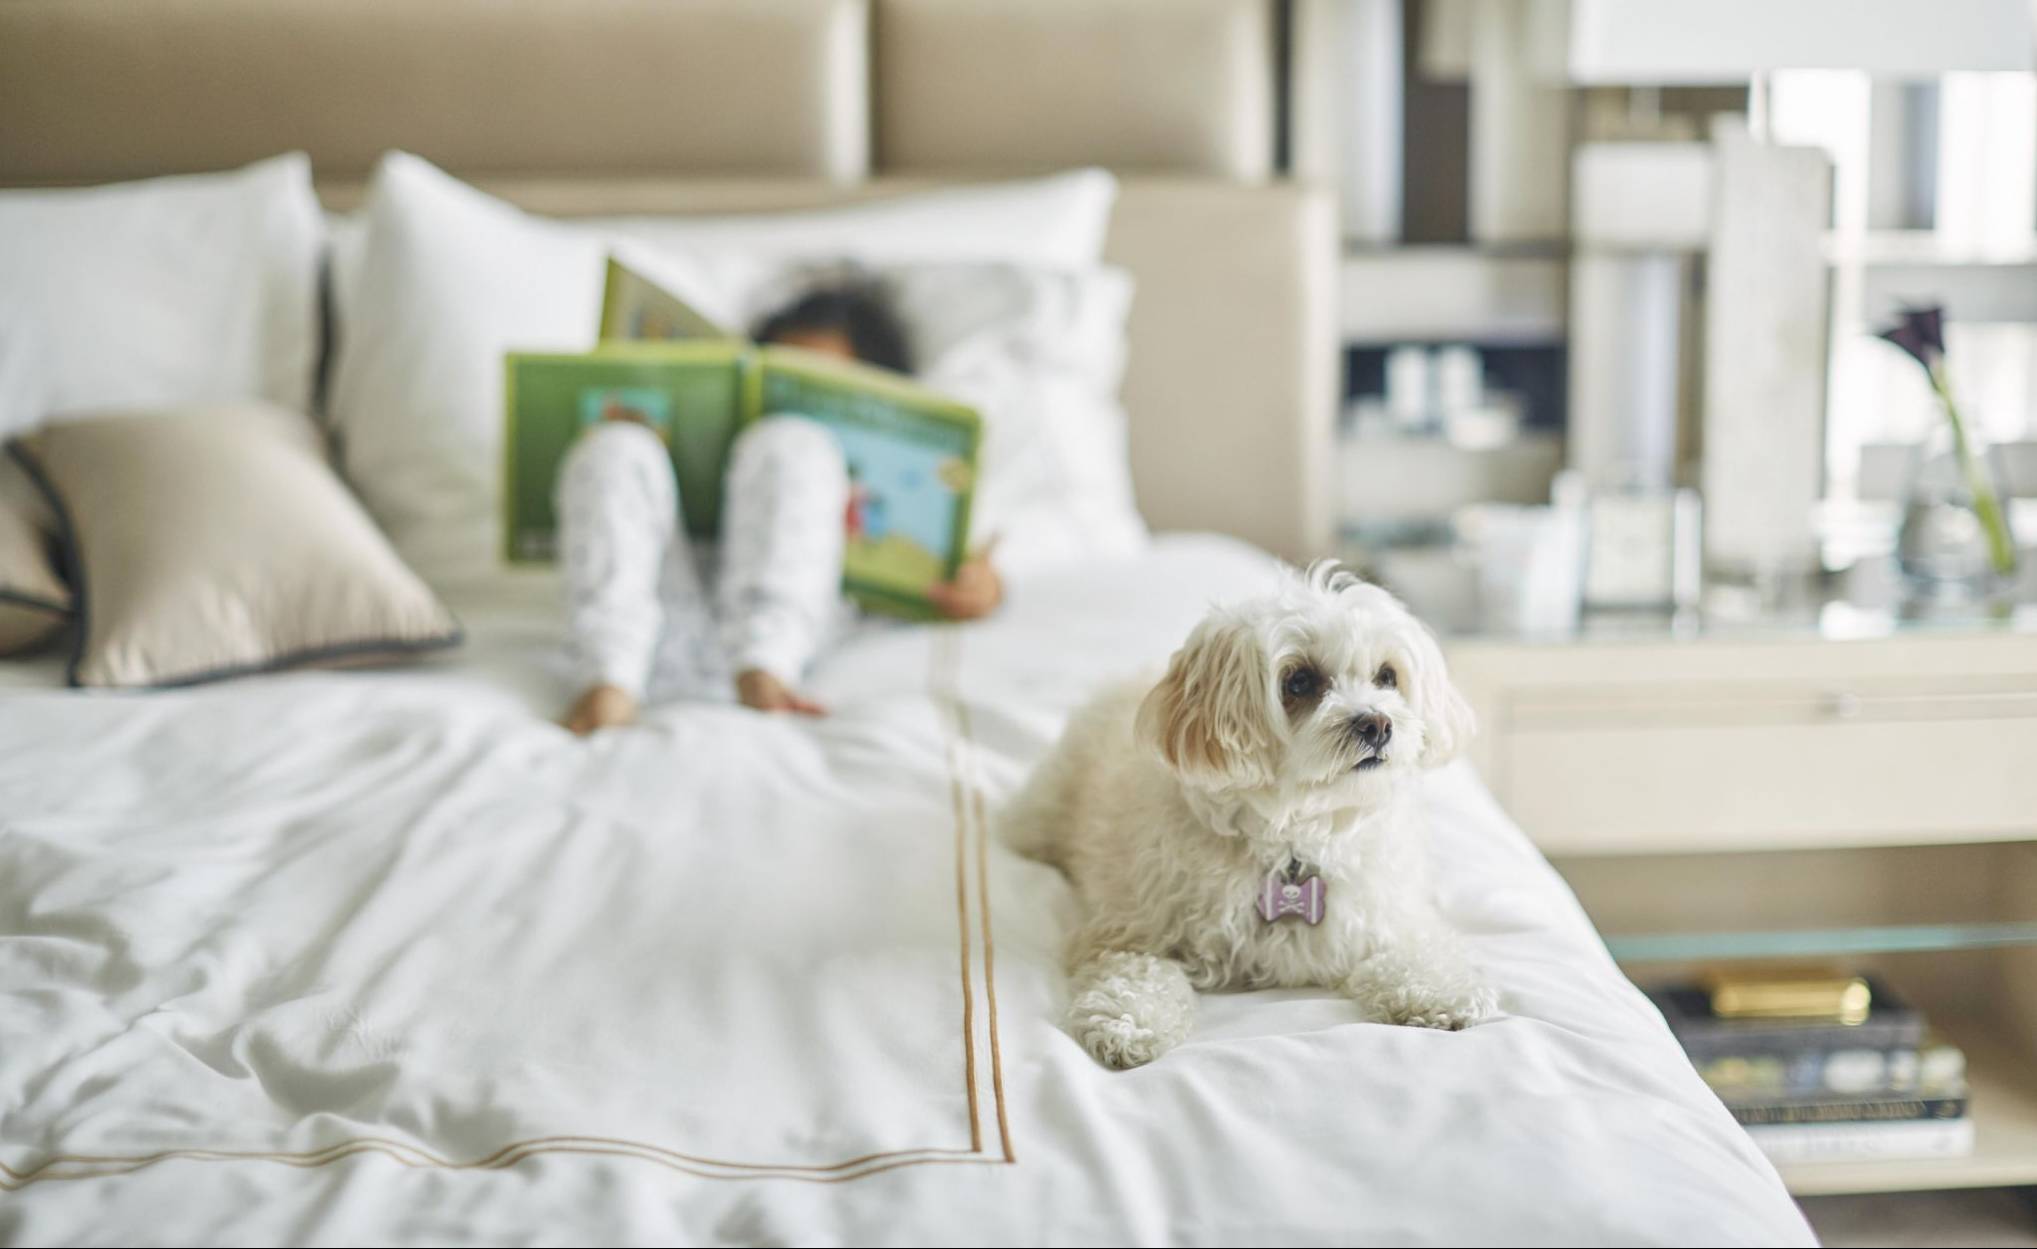 LuxeGetaways - Luxury Travel - Luxury Travel Magazine - Luxe Getaways - Luxury Lifestyle - Beverly Hills - Dog Campaign - Travel with your dog